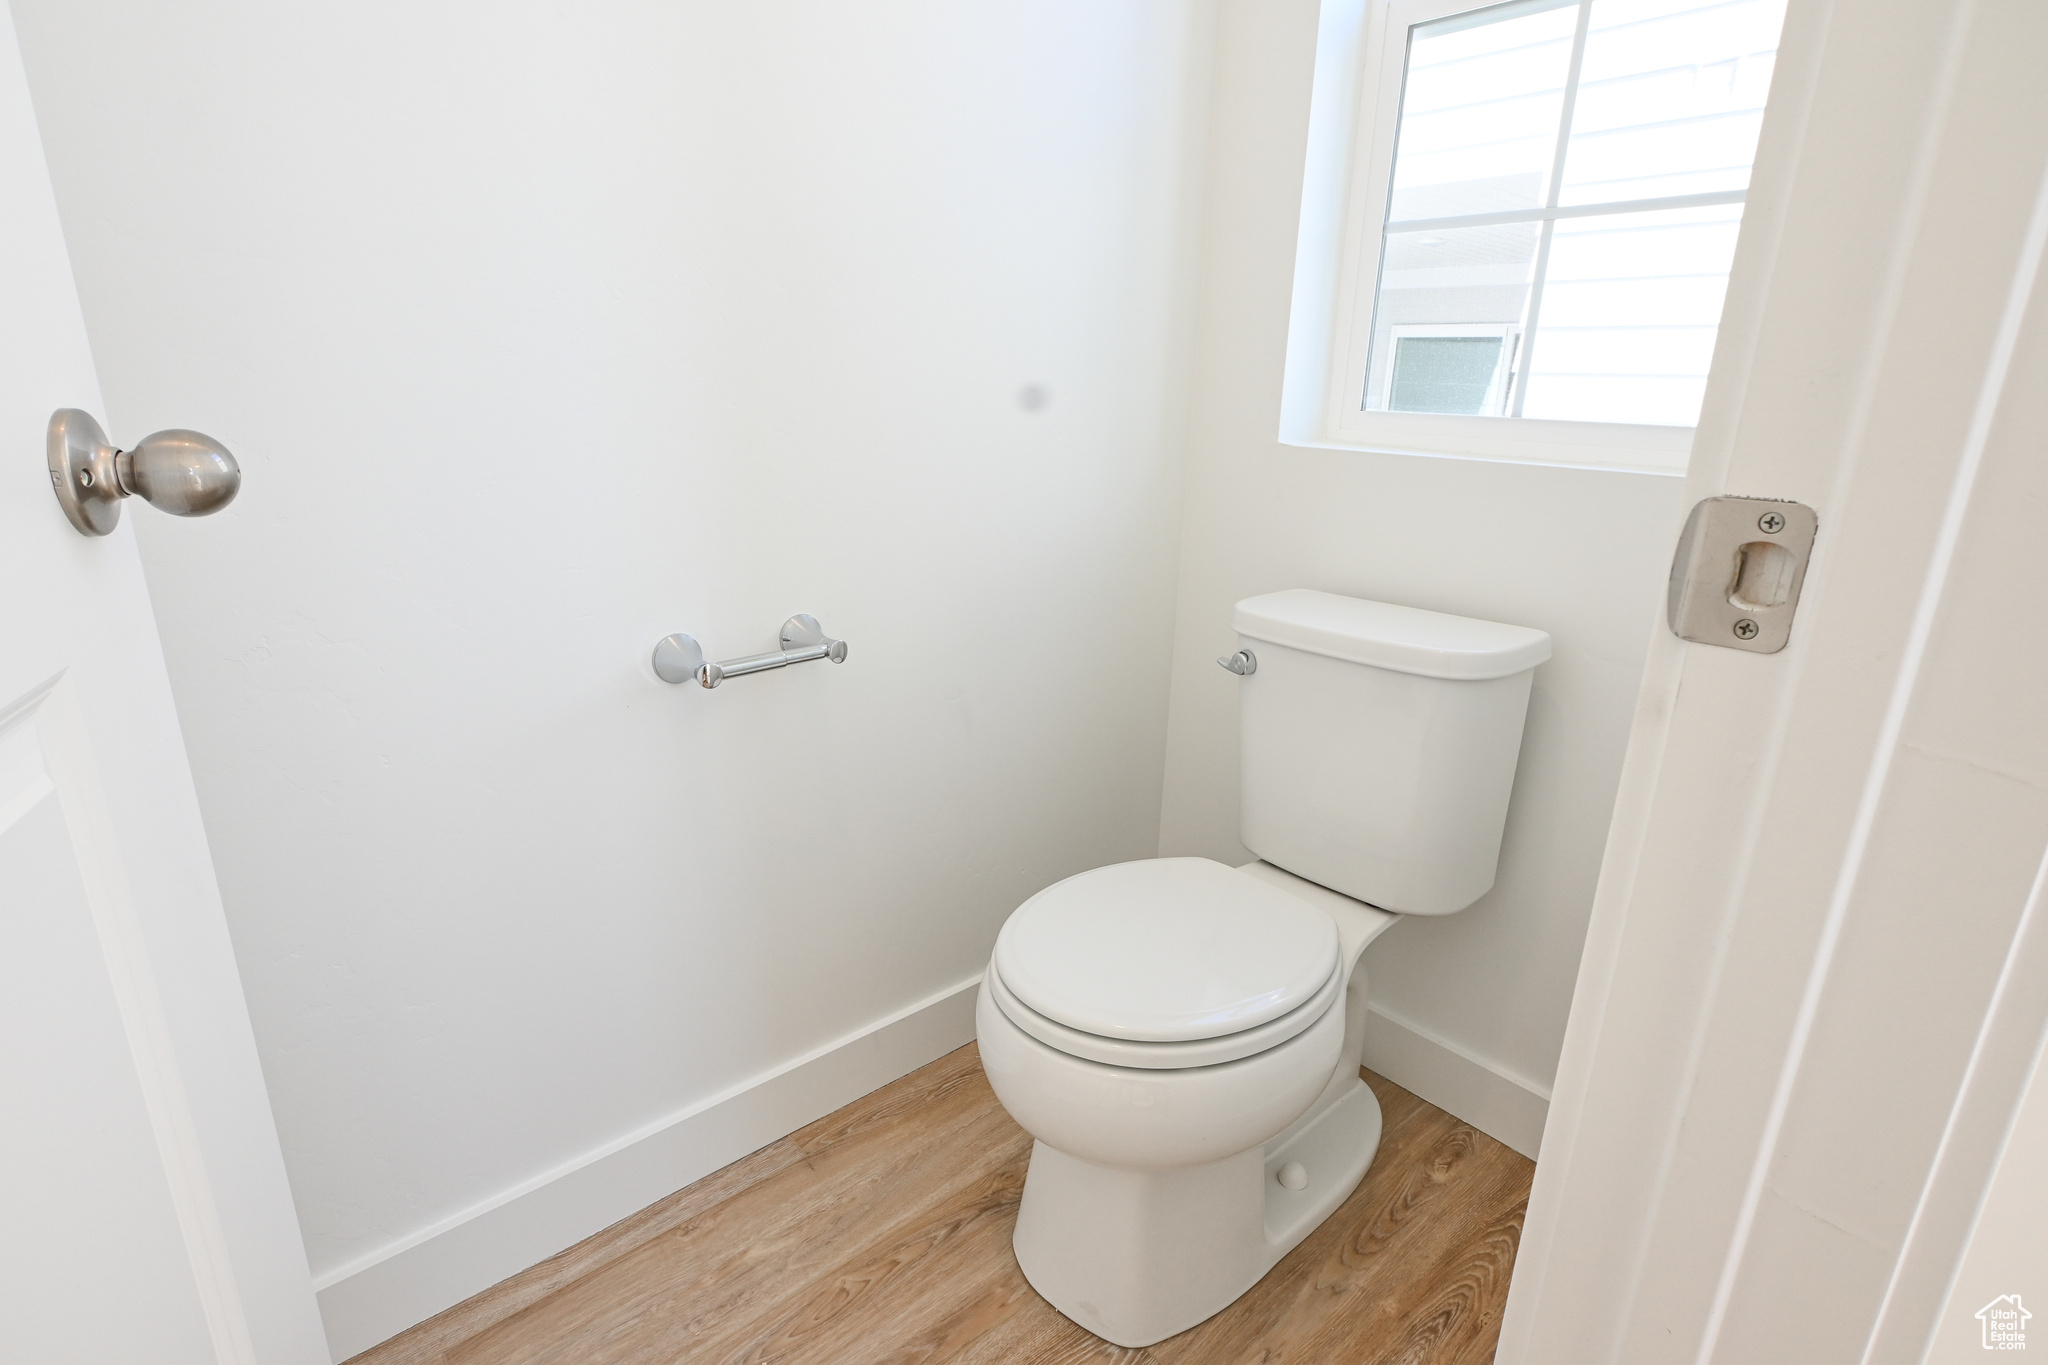 Bathroom with toilet and hardwood / wood-style flooring